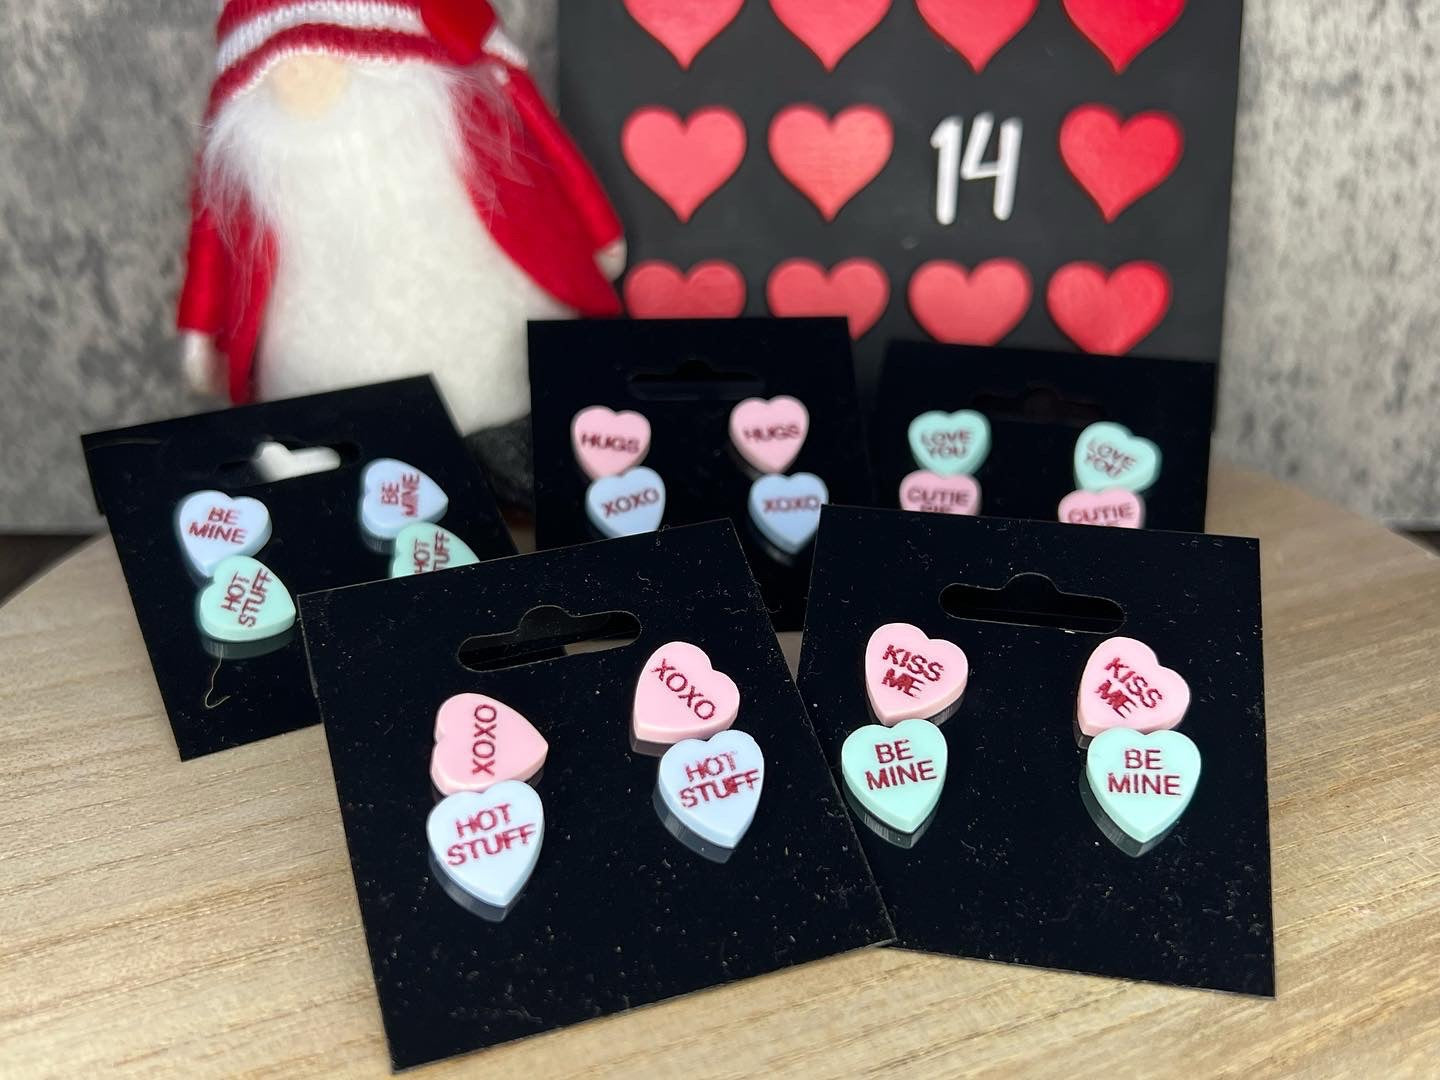 Conversation heart earring stud - Valentines day gift – kikiscreationsnj